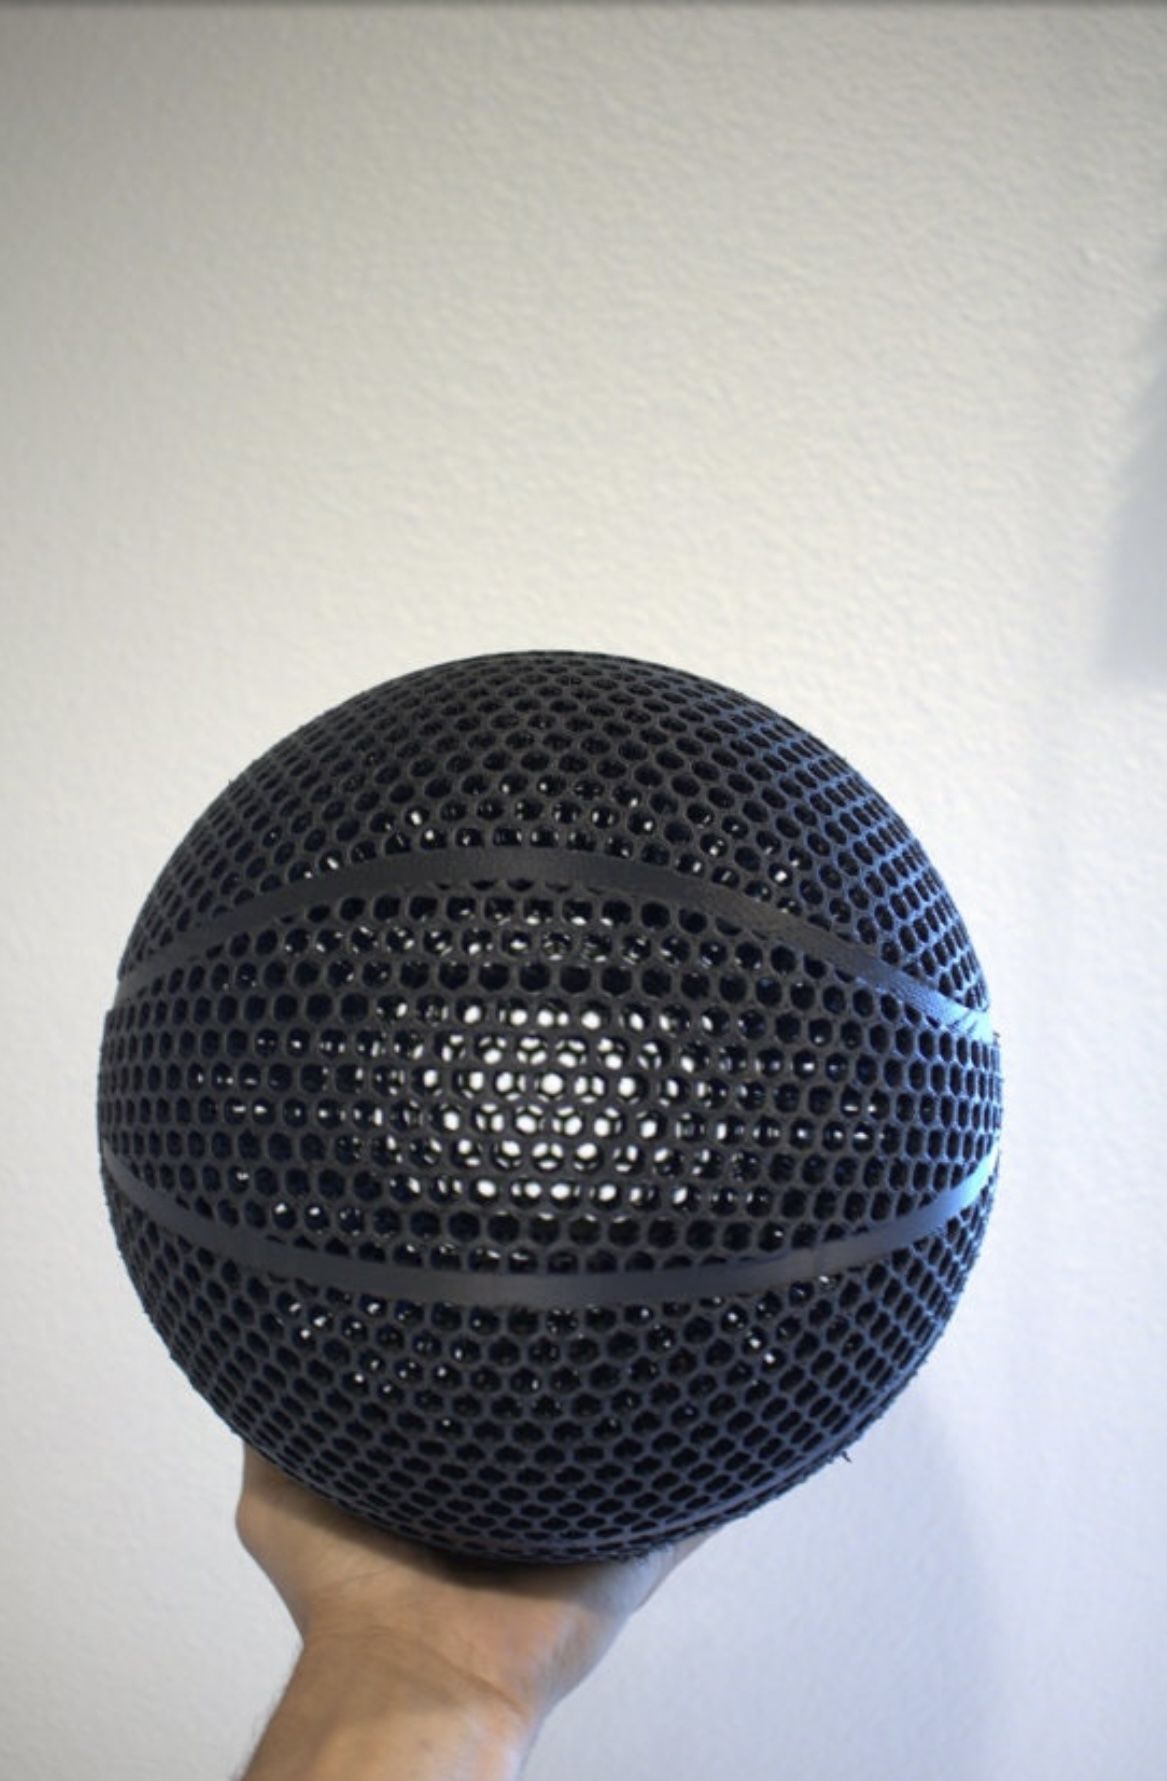 3D Printed Basketball - (Bouncy!)